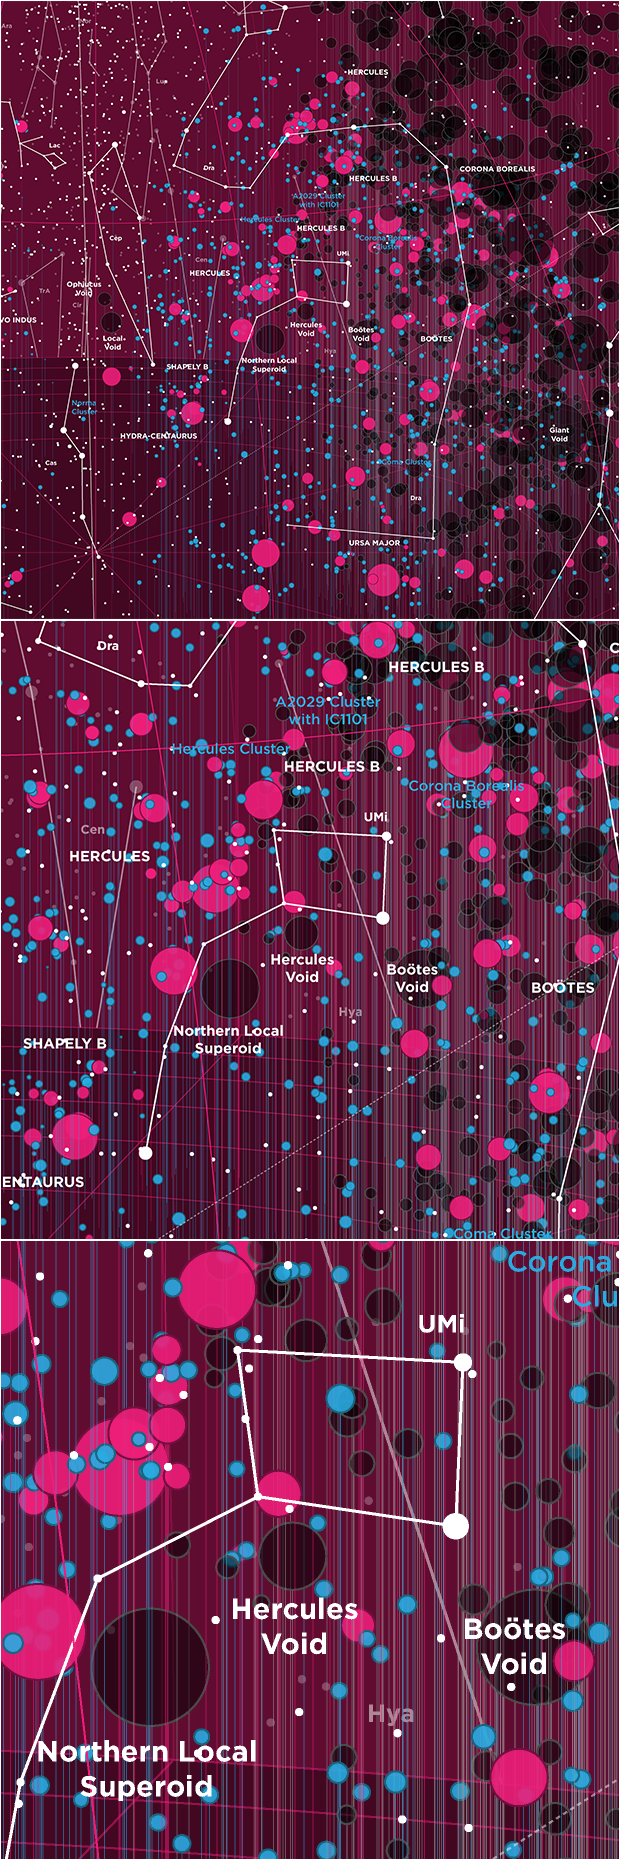 Universe - Superclusters and Voids / Martin Krzywinski @MKrzywinski mkweb.bcgsc.ca